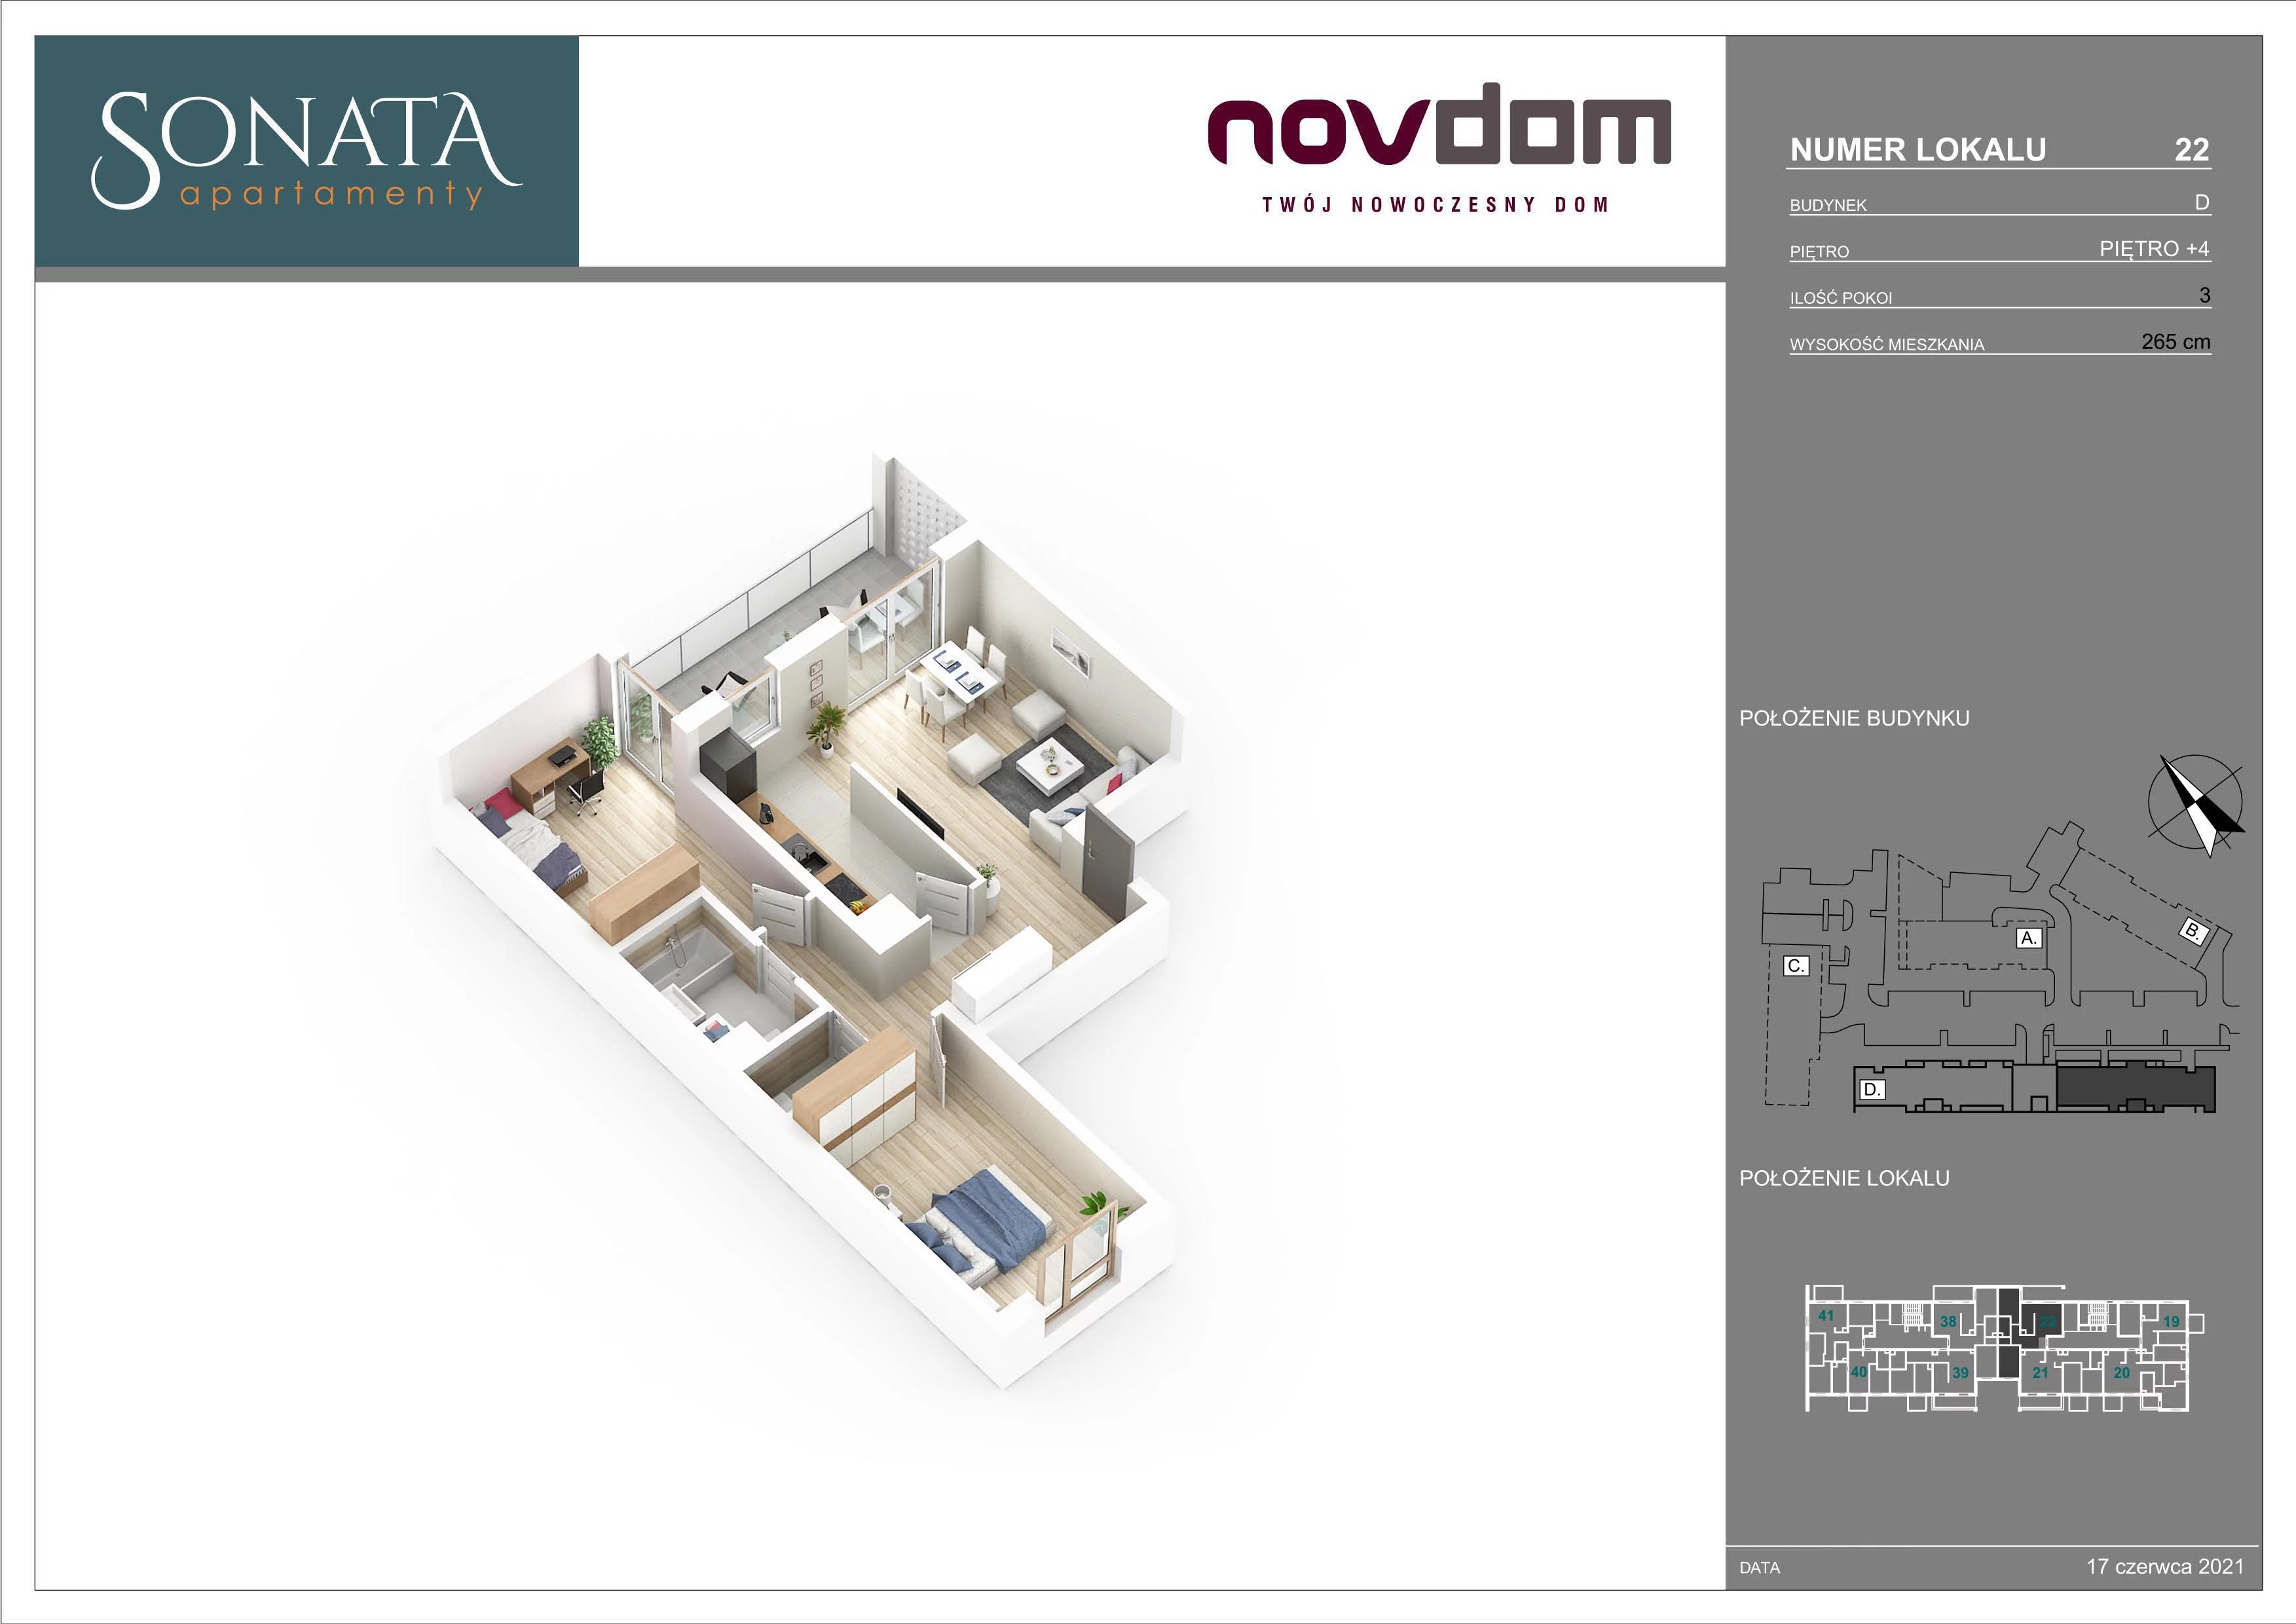 Apartament 66,37 m², piętro 4, oferta nr D/22, Apartamenty Sonata II, Szczytno, ul. Królowej Jadwigi 6